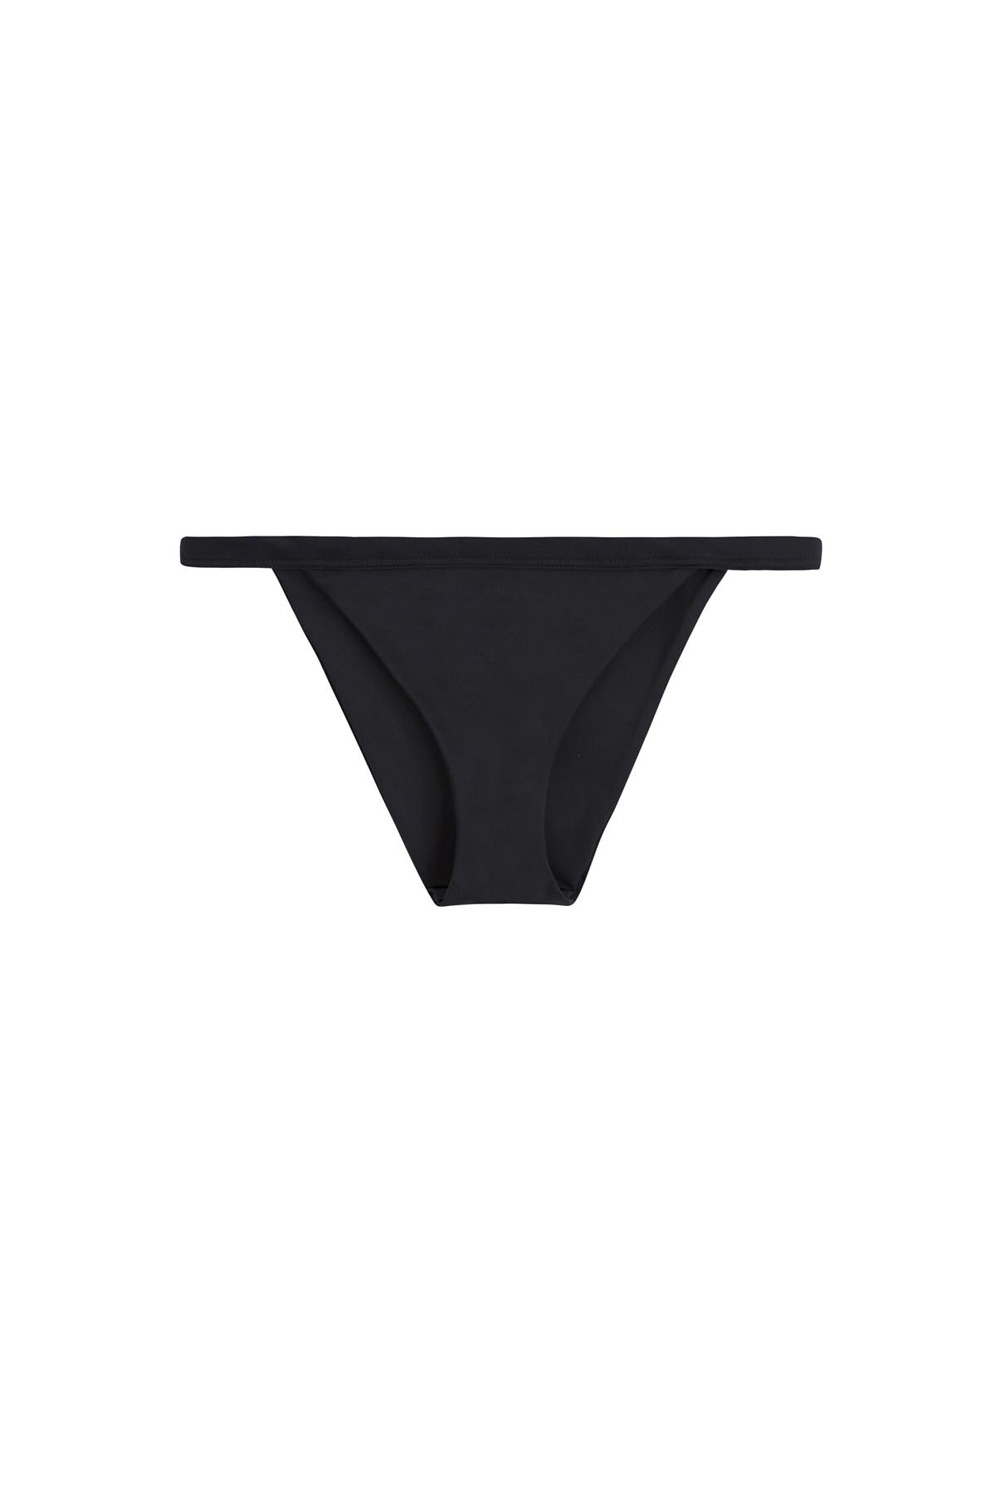 Black caicos bikini bottom by NOW_THEN. Handmade eco swimwear, regenerated econyl nylon, toxics free swimwear, ropa de baño ecológica, ethically made in Spain